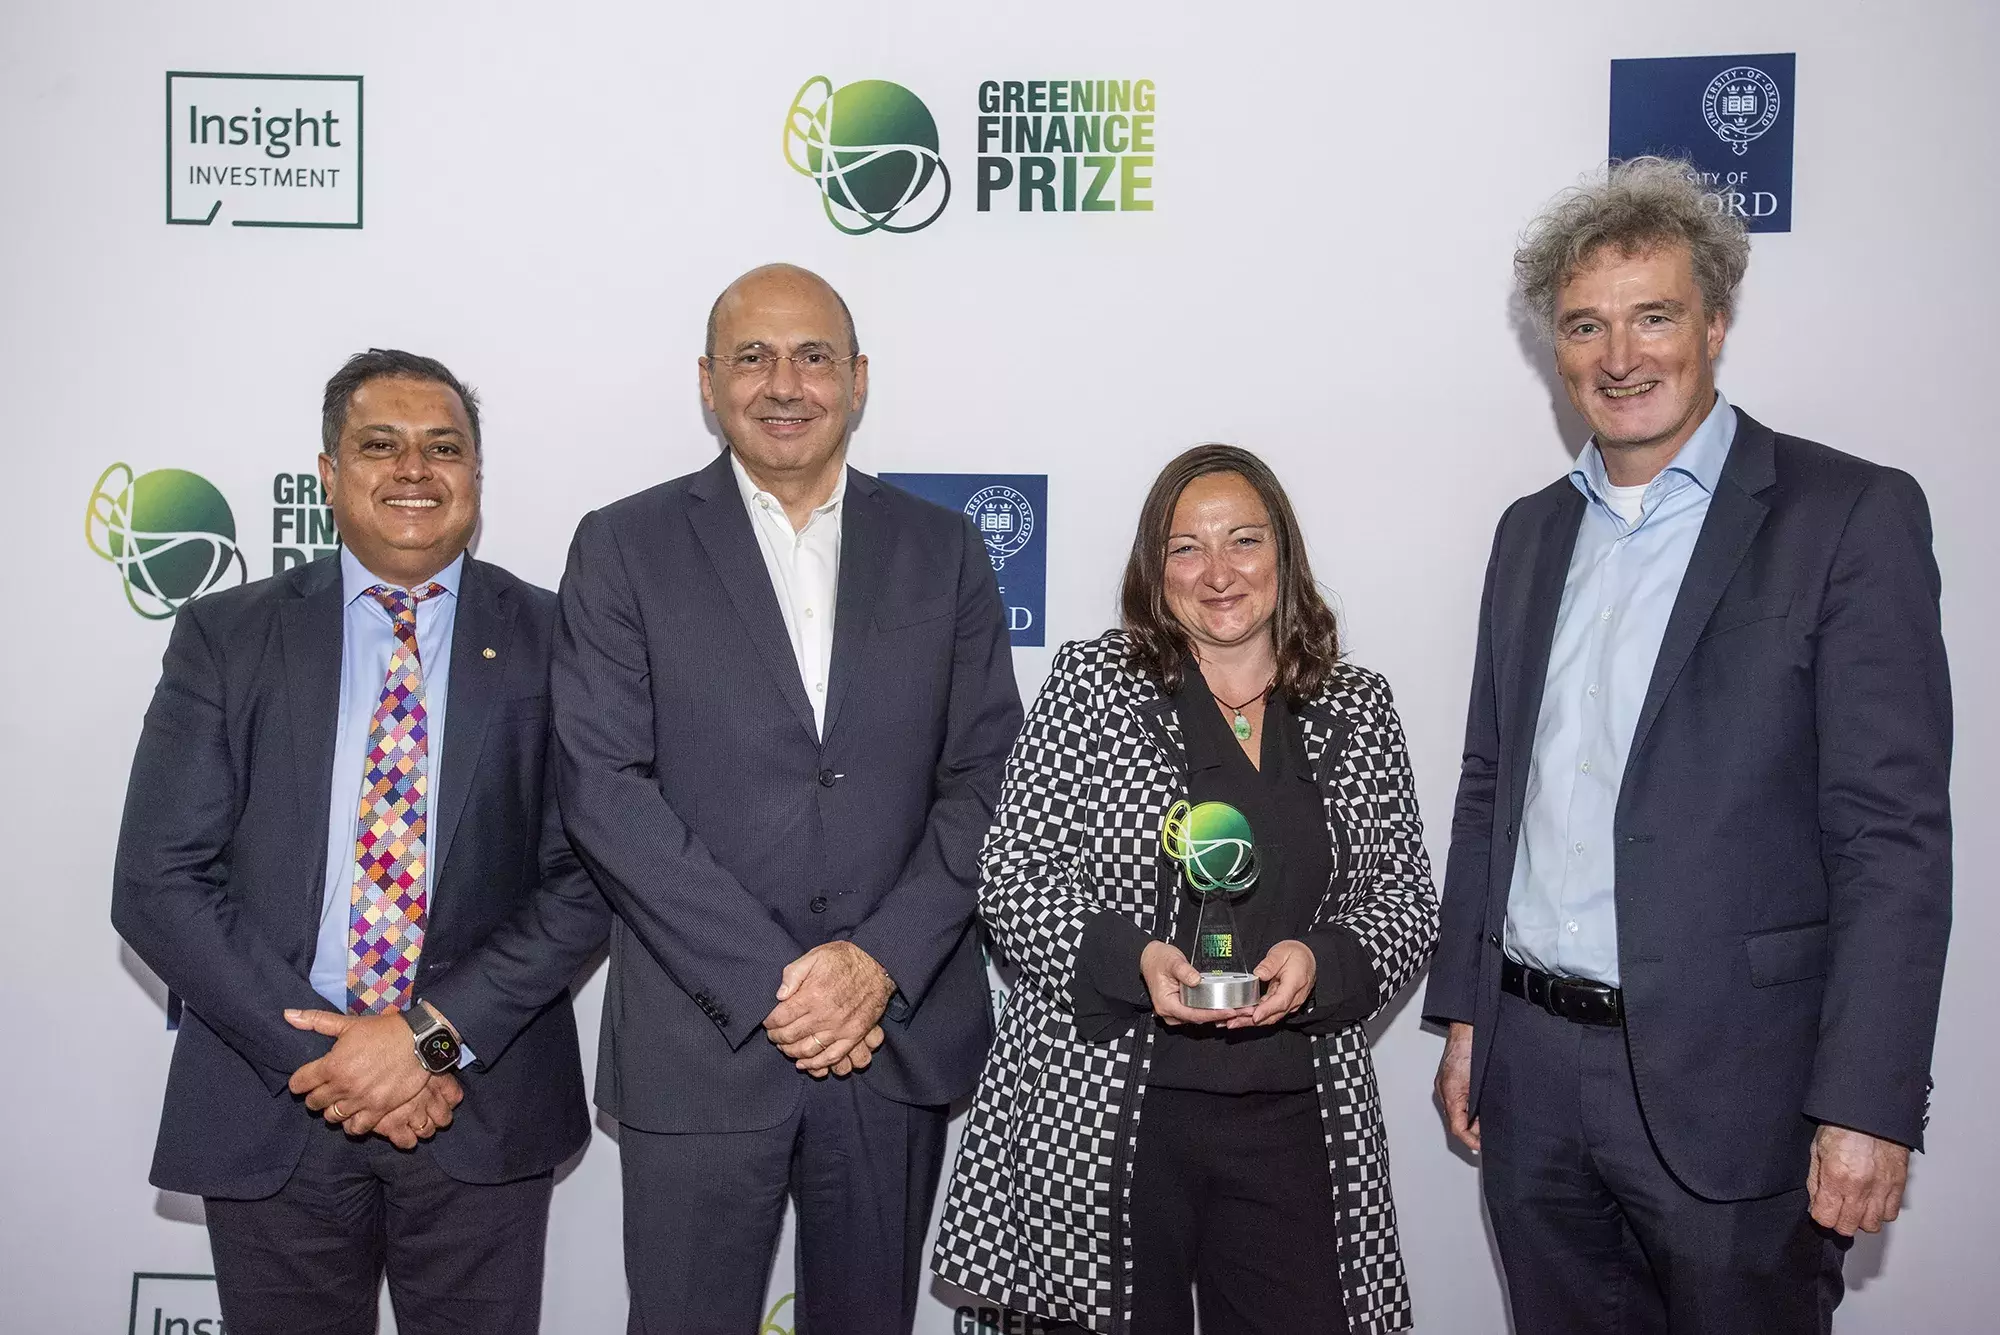 Green finance prize award ceremony